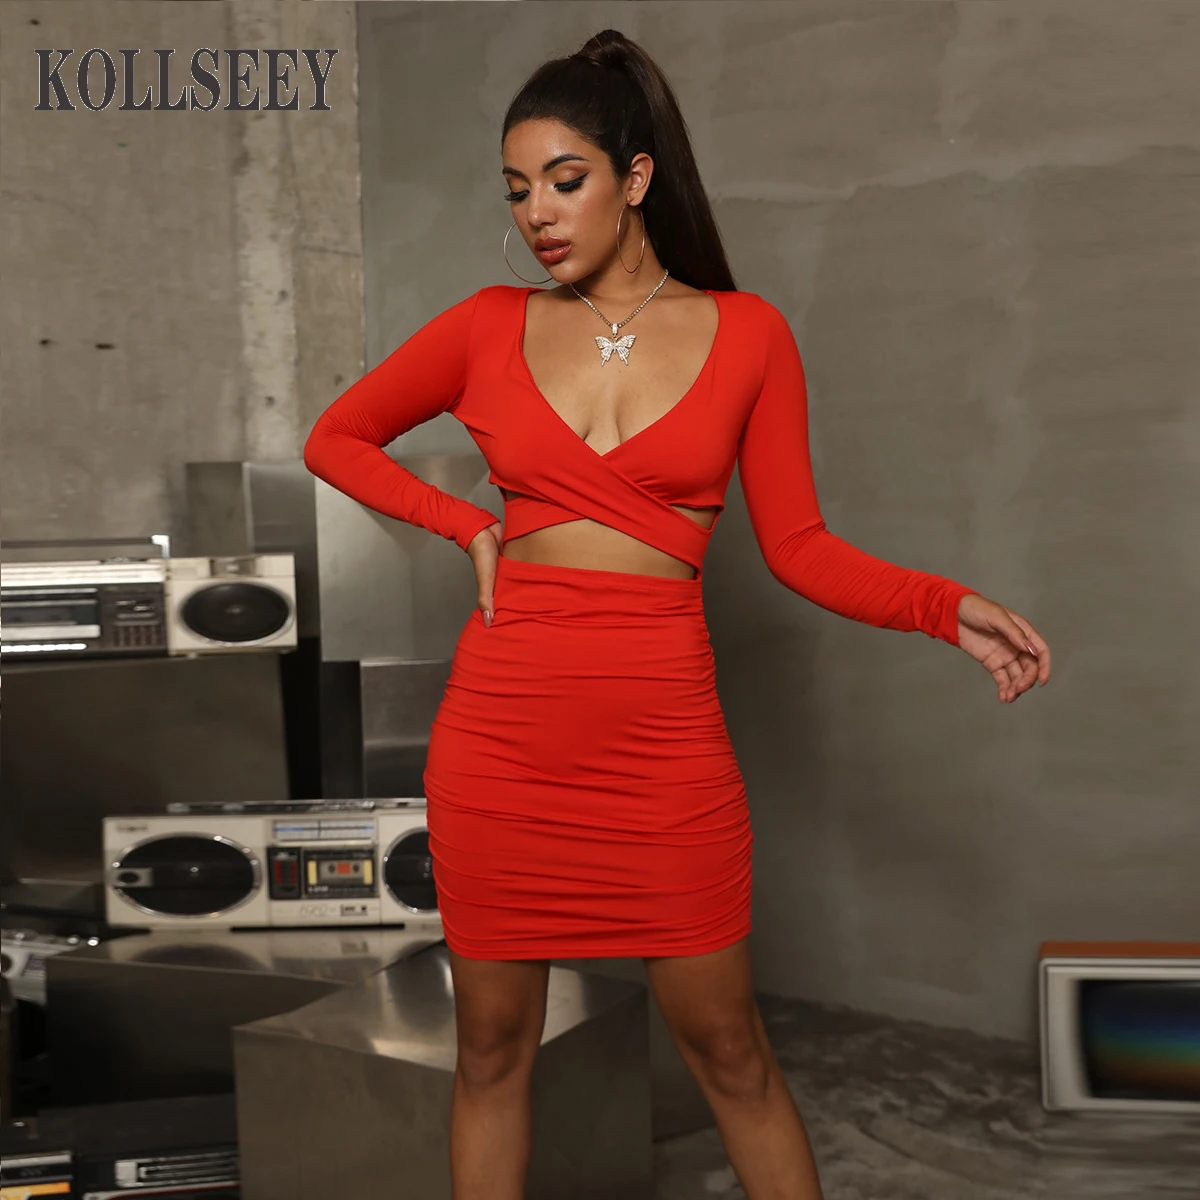 KOLLSEEY Brand Summer New Fashion Sleeveless Knitting Ribbed Spaghetti Strap Sexy Body Mini Dress Women Casual Dresses enlarge